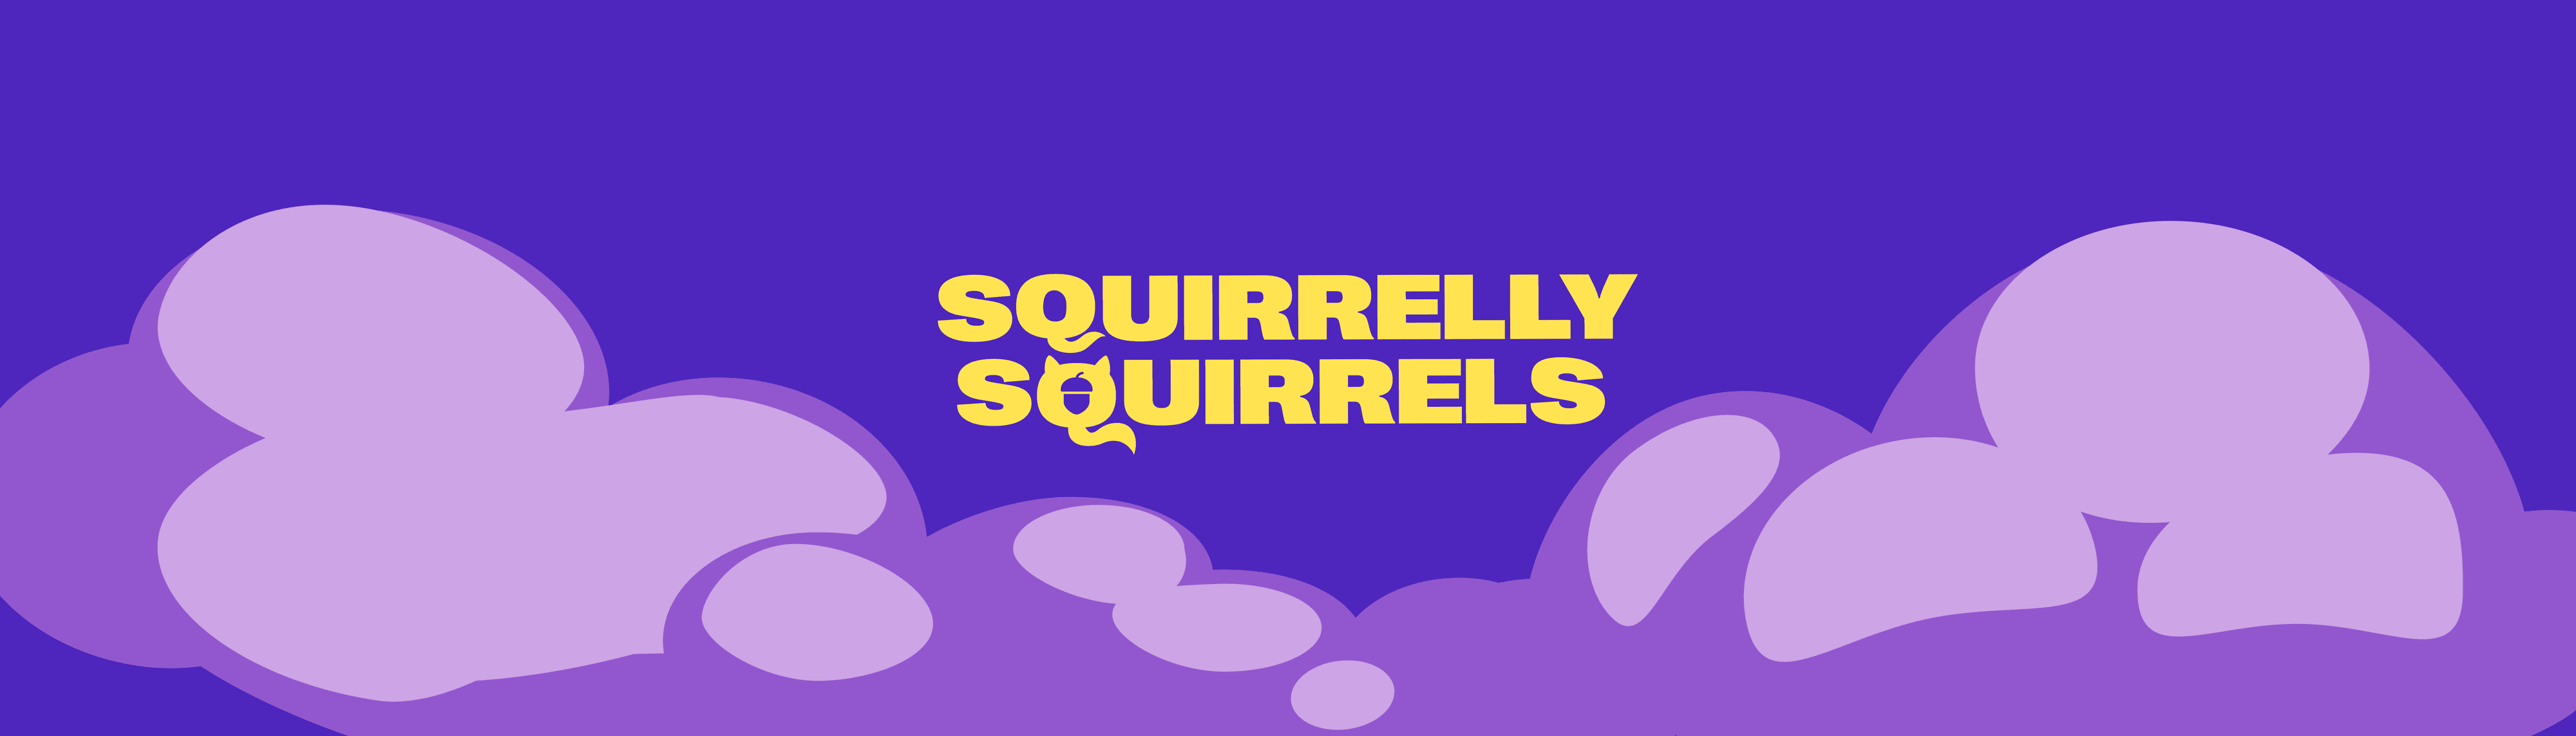 SquirrelDeployer 横幅